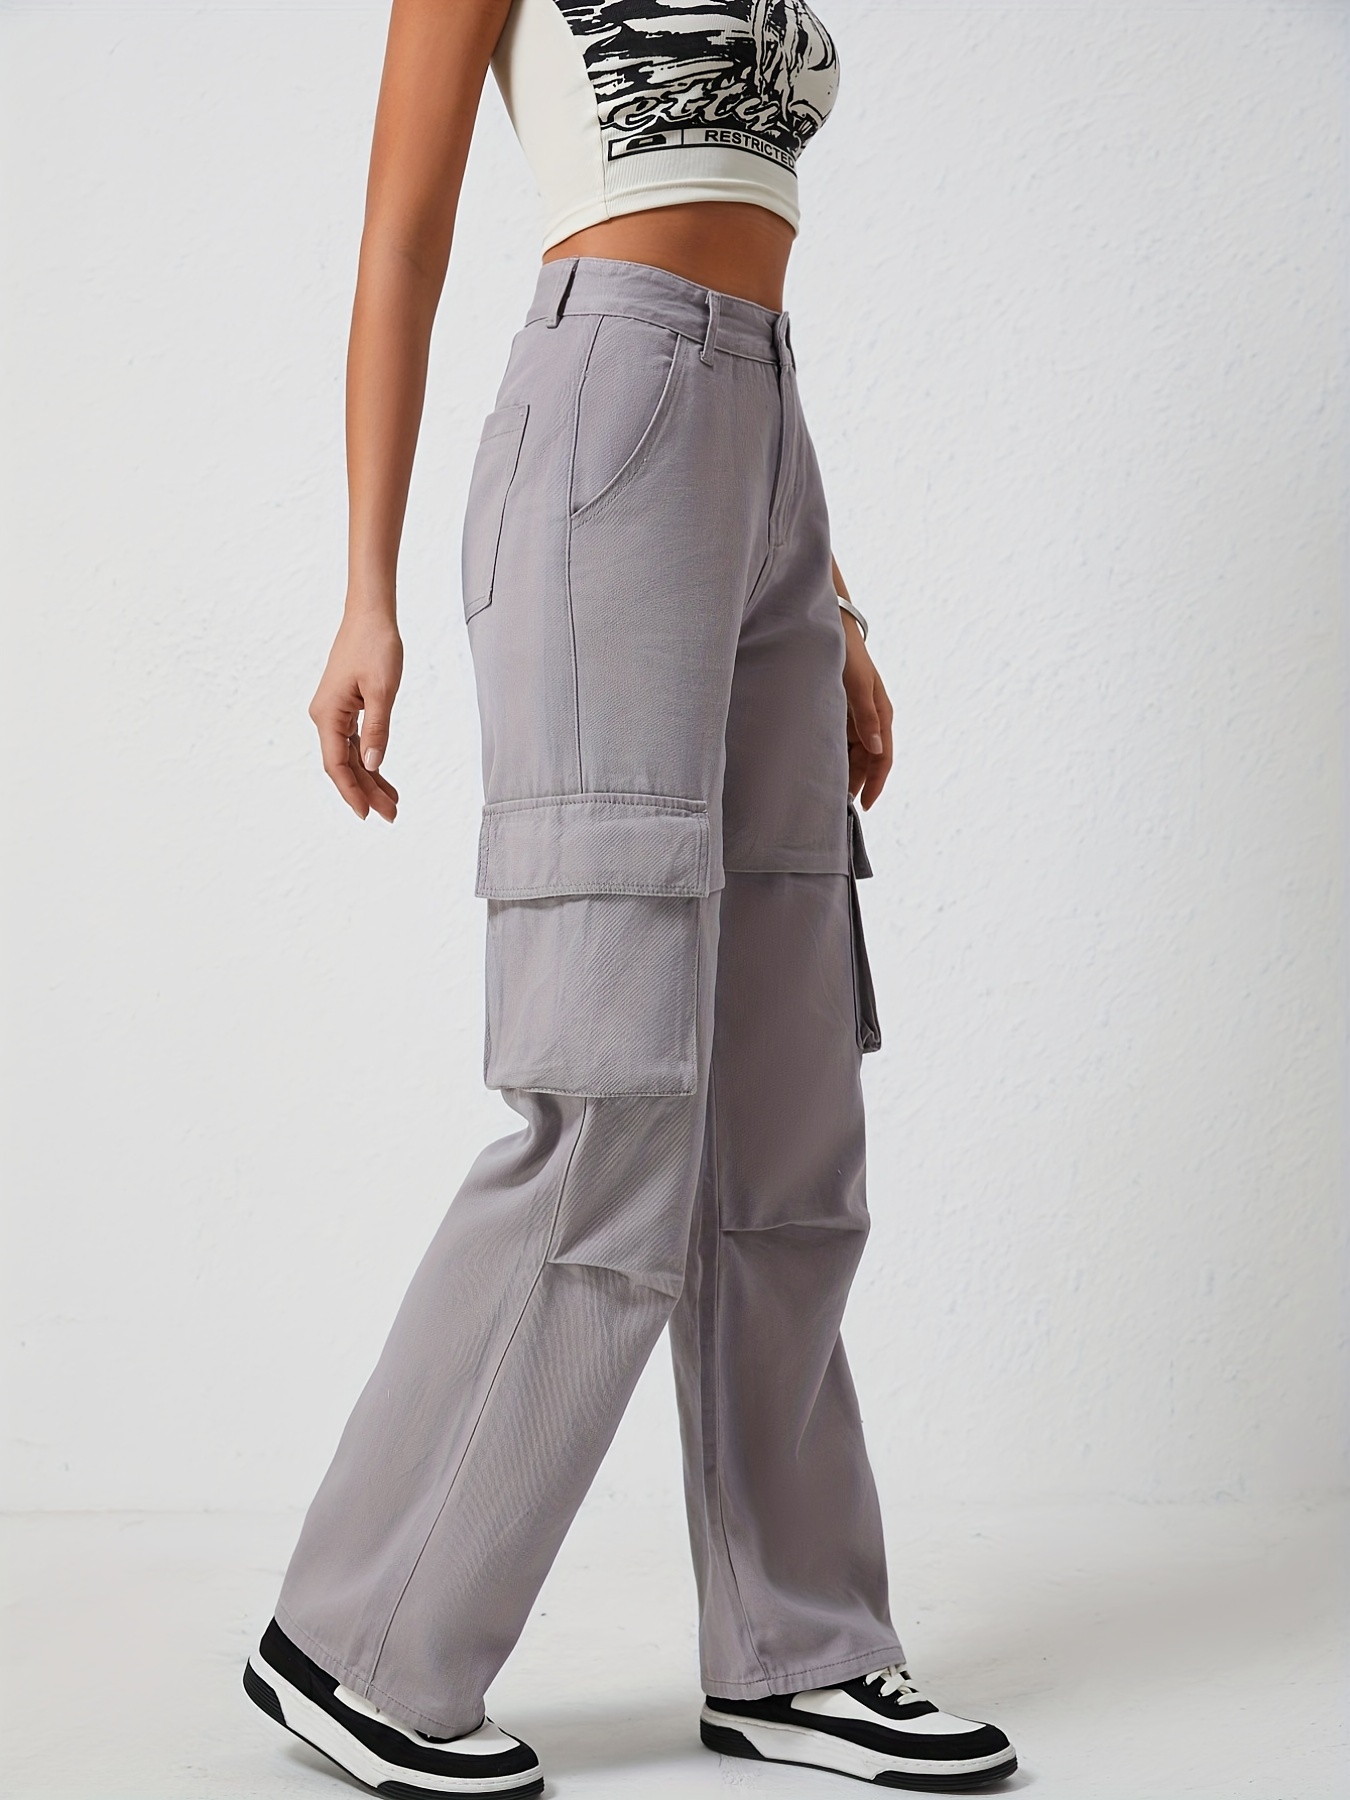 Fashion Women Casual Cargo Pants Khaki Solid Color High Waist